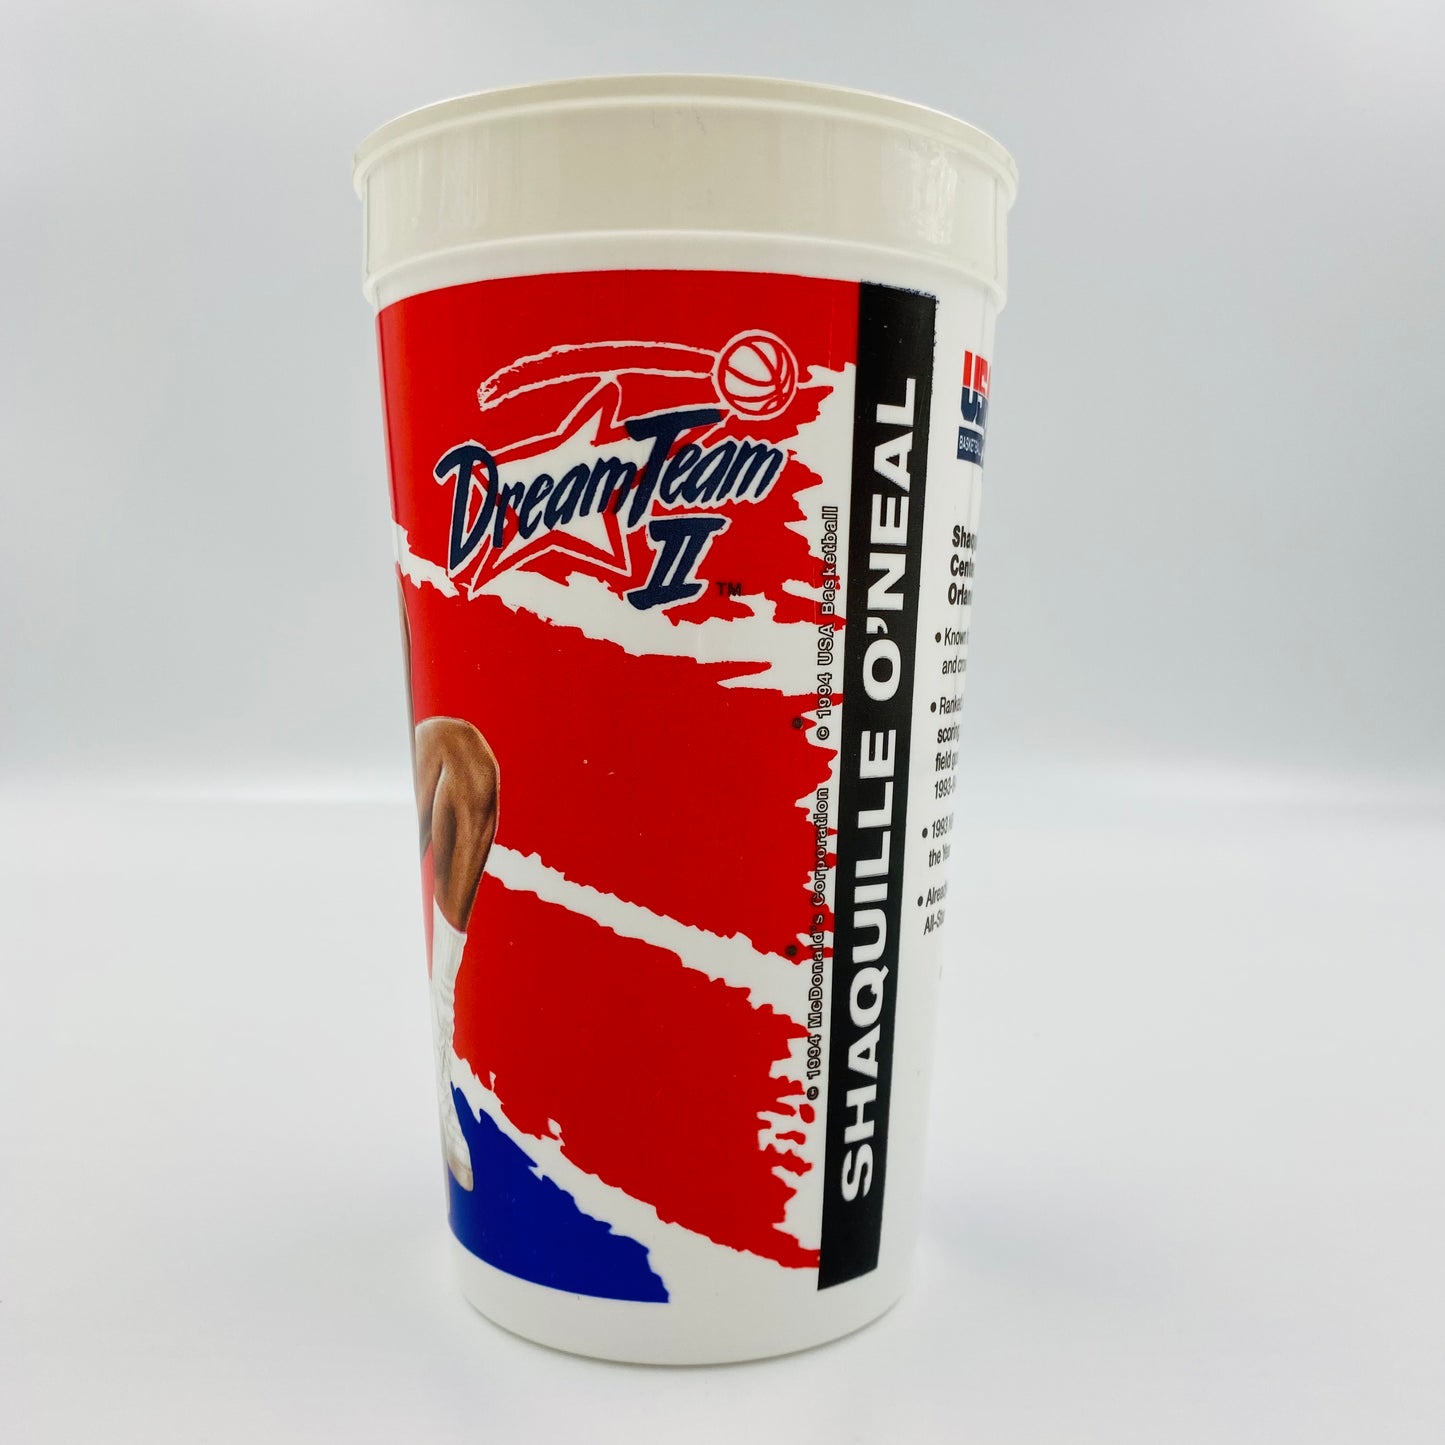 USA Basketball Dream Team II Shaquille “Shaq” O’Neal 32oz plastic cup (1994) McDonald's